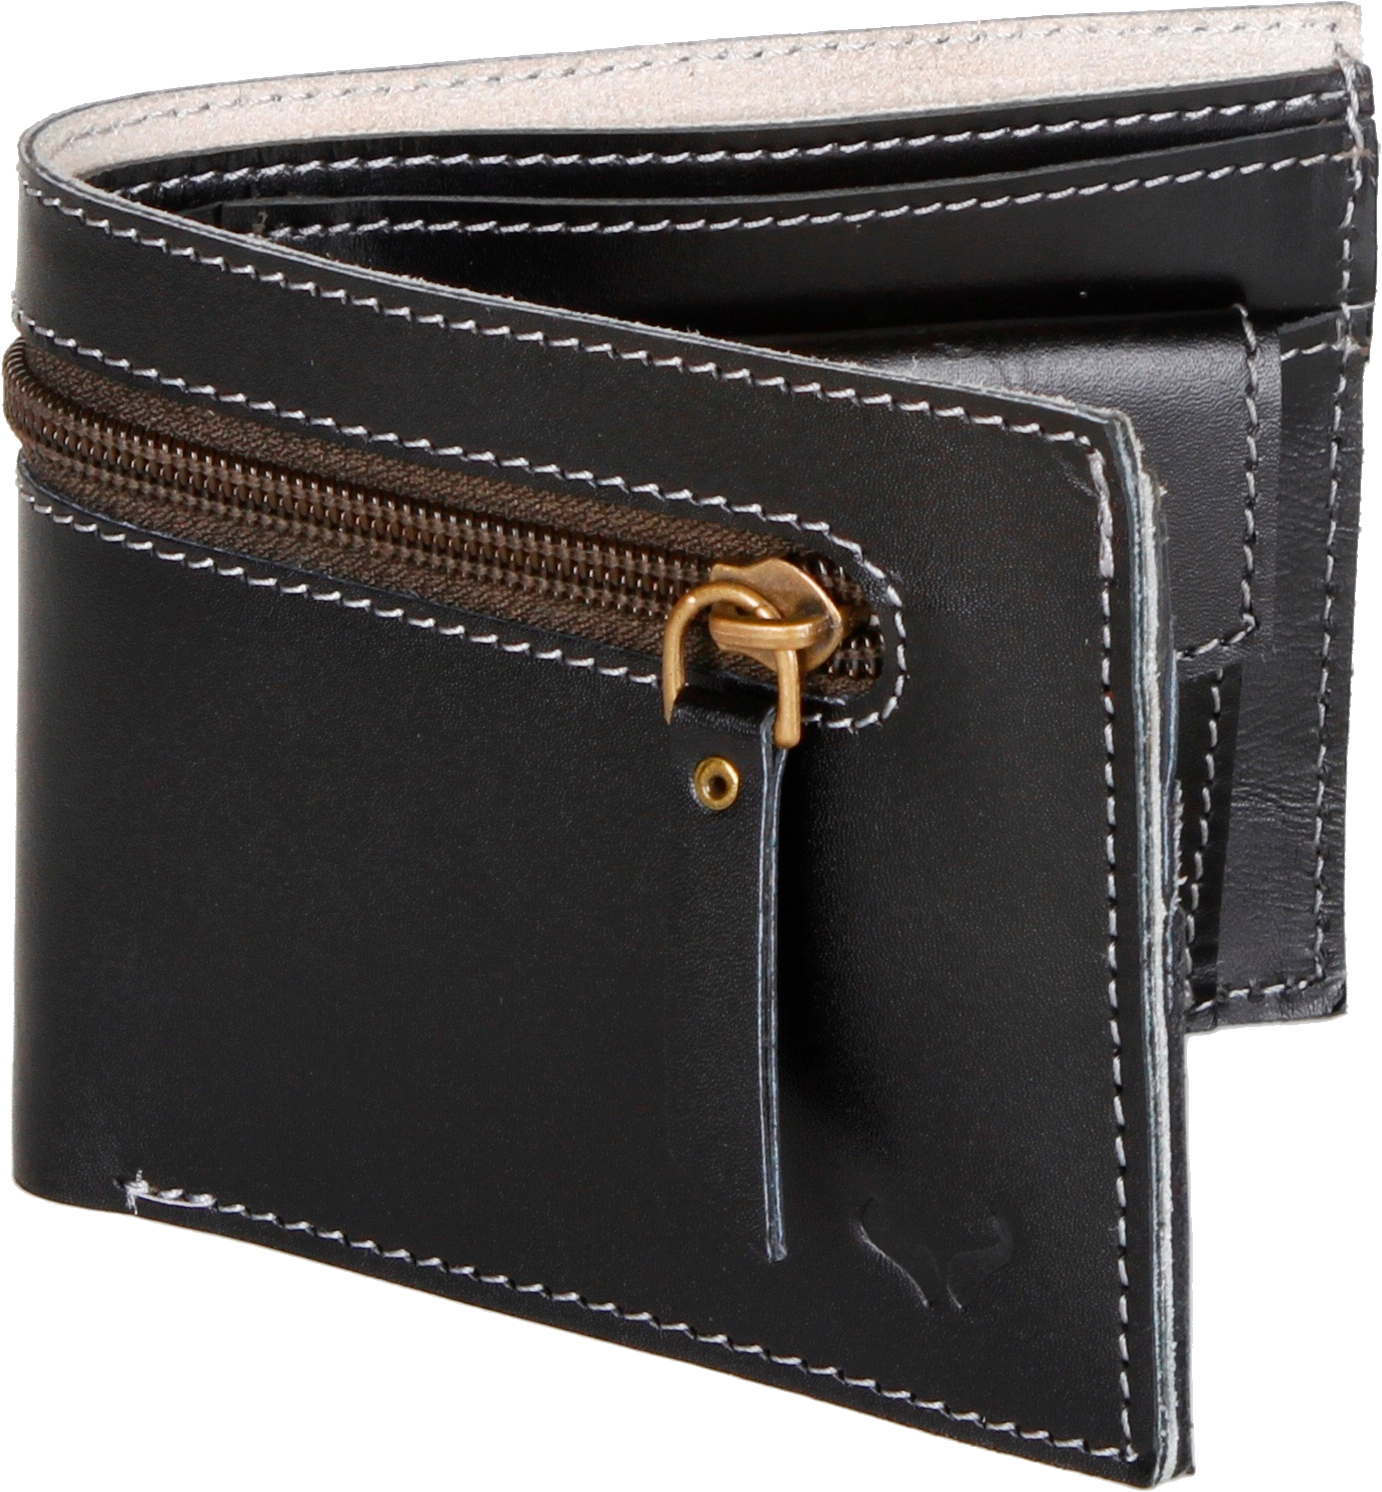 A Black Wallet With A Zipper